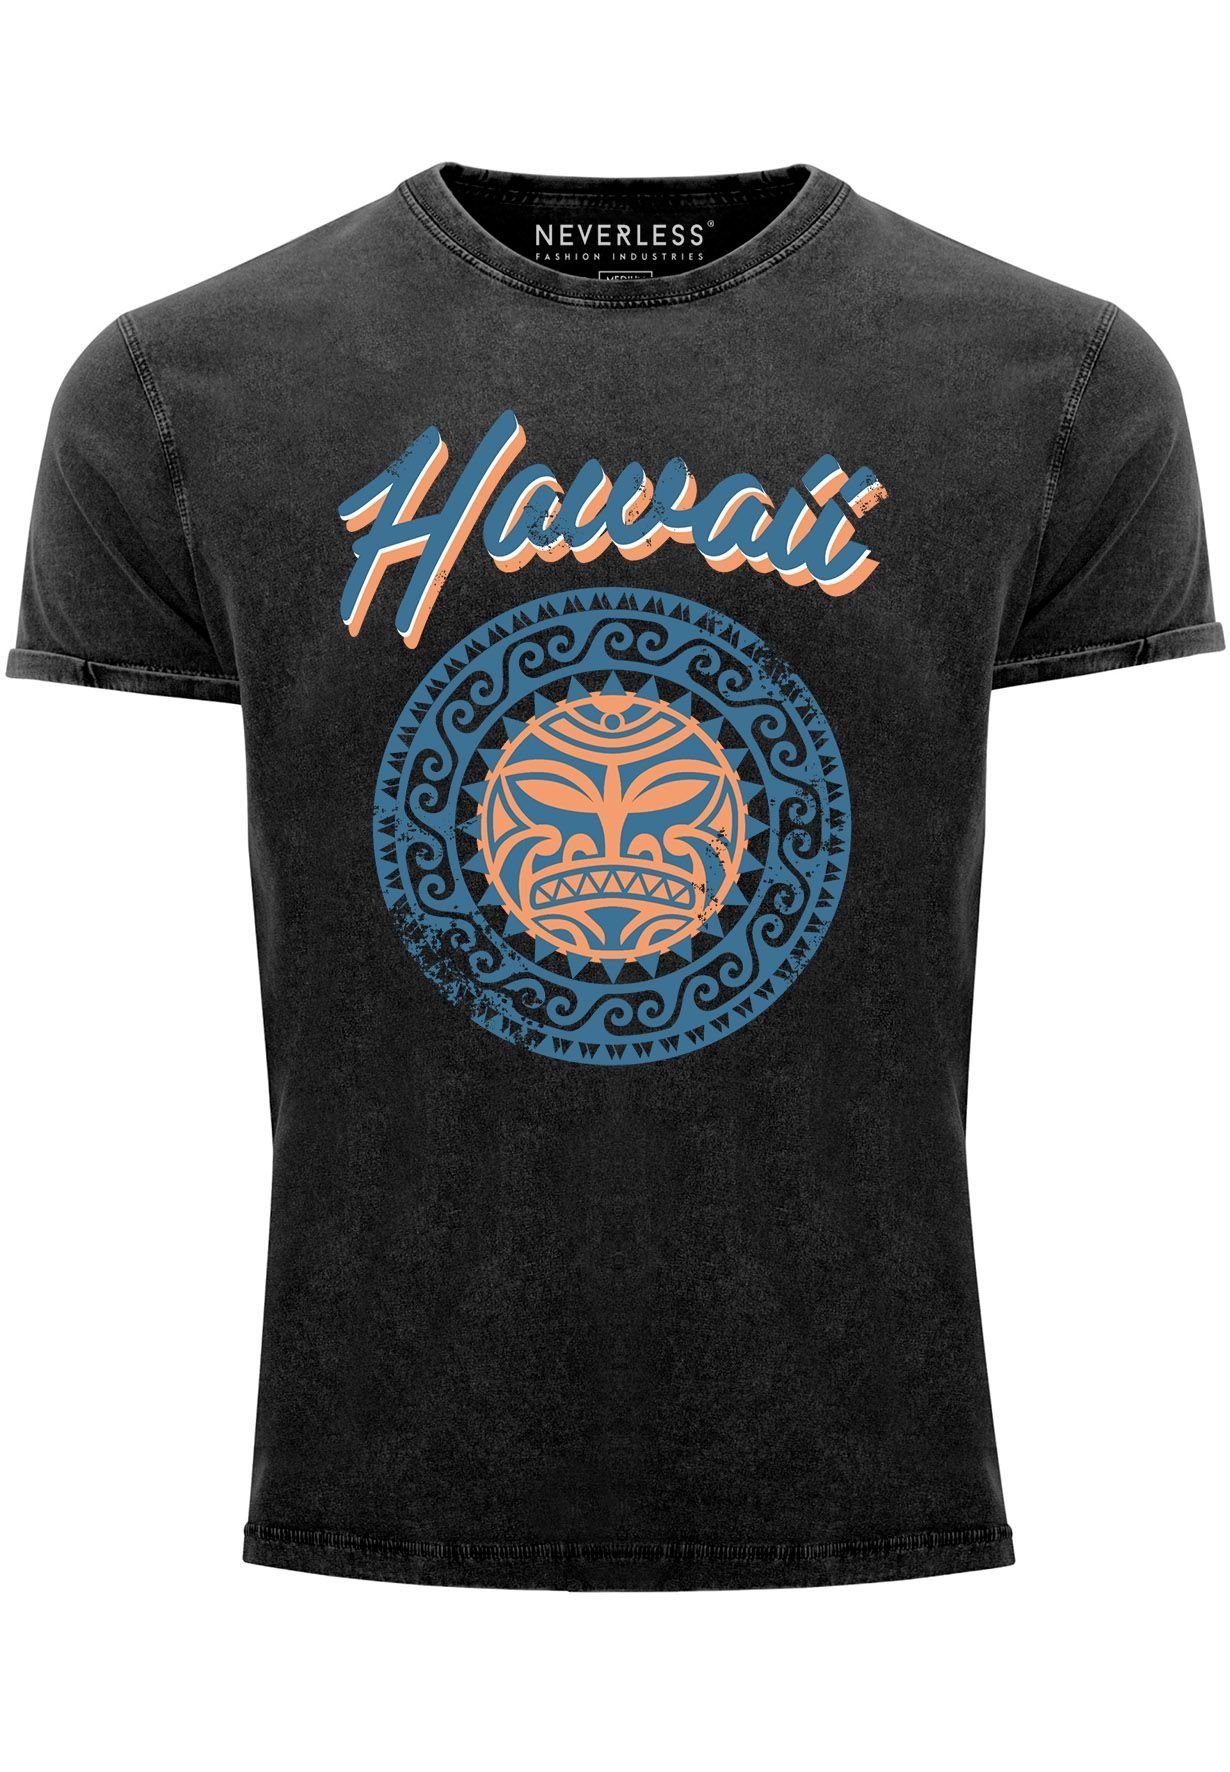 Neverless Print-Shirt Herren T-Shirt Hawaii schwarz mit Tribal Style Maui Ethno Print Tattoo Vintag Printshirt